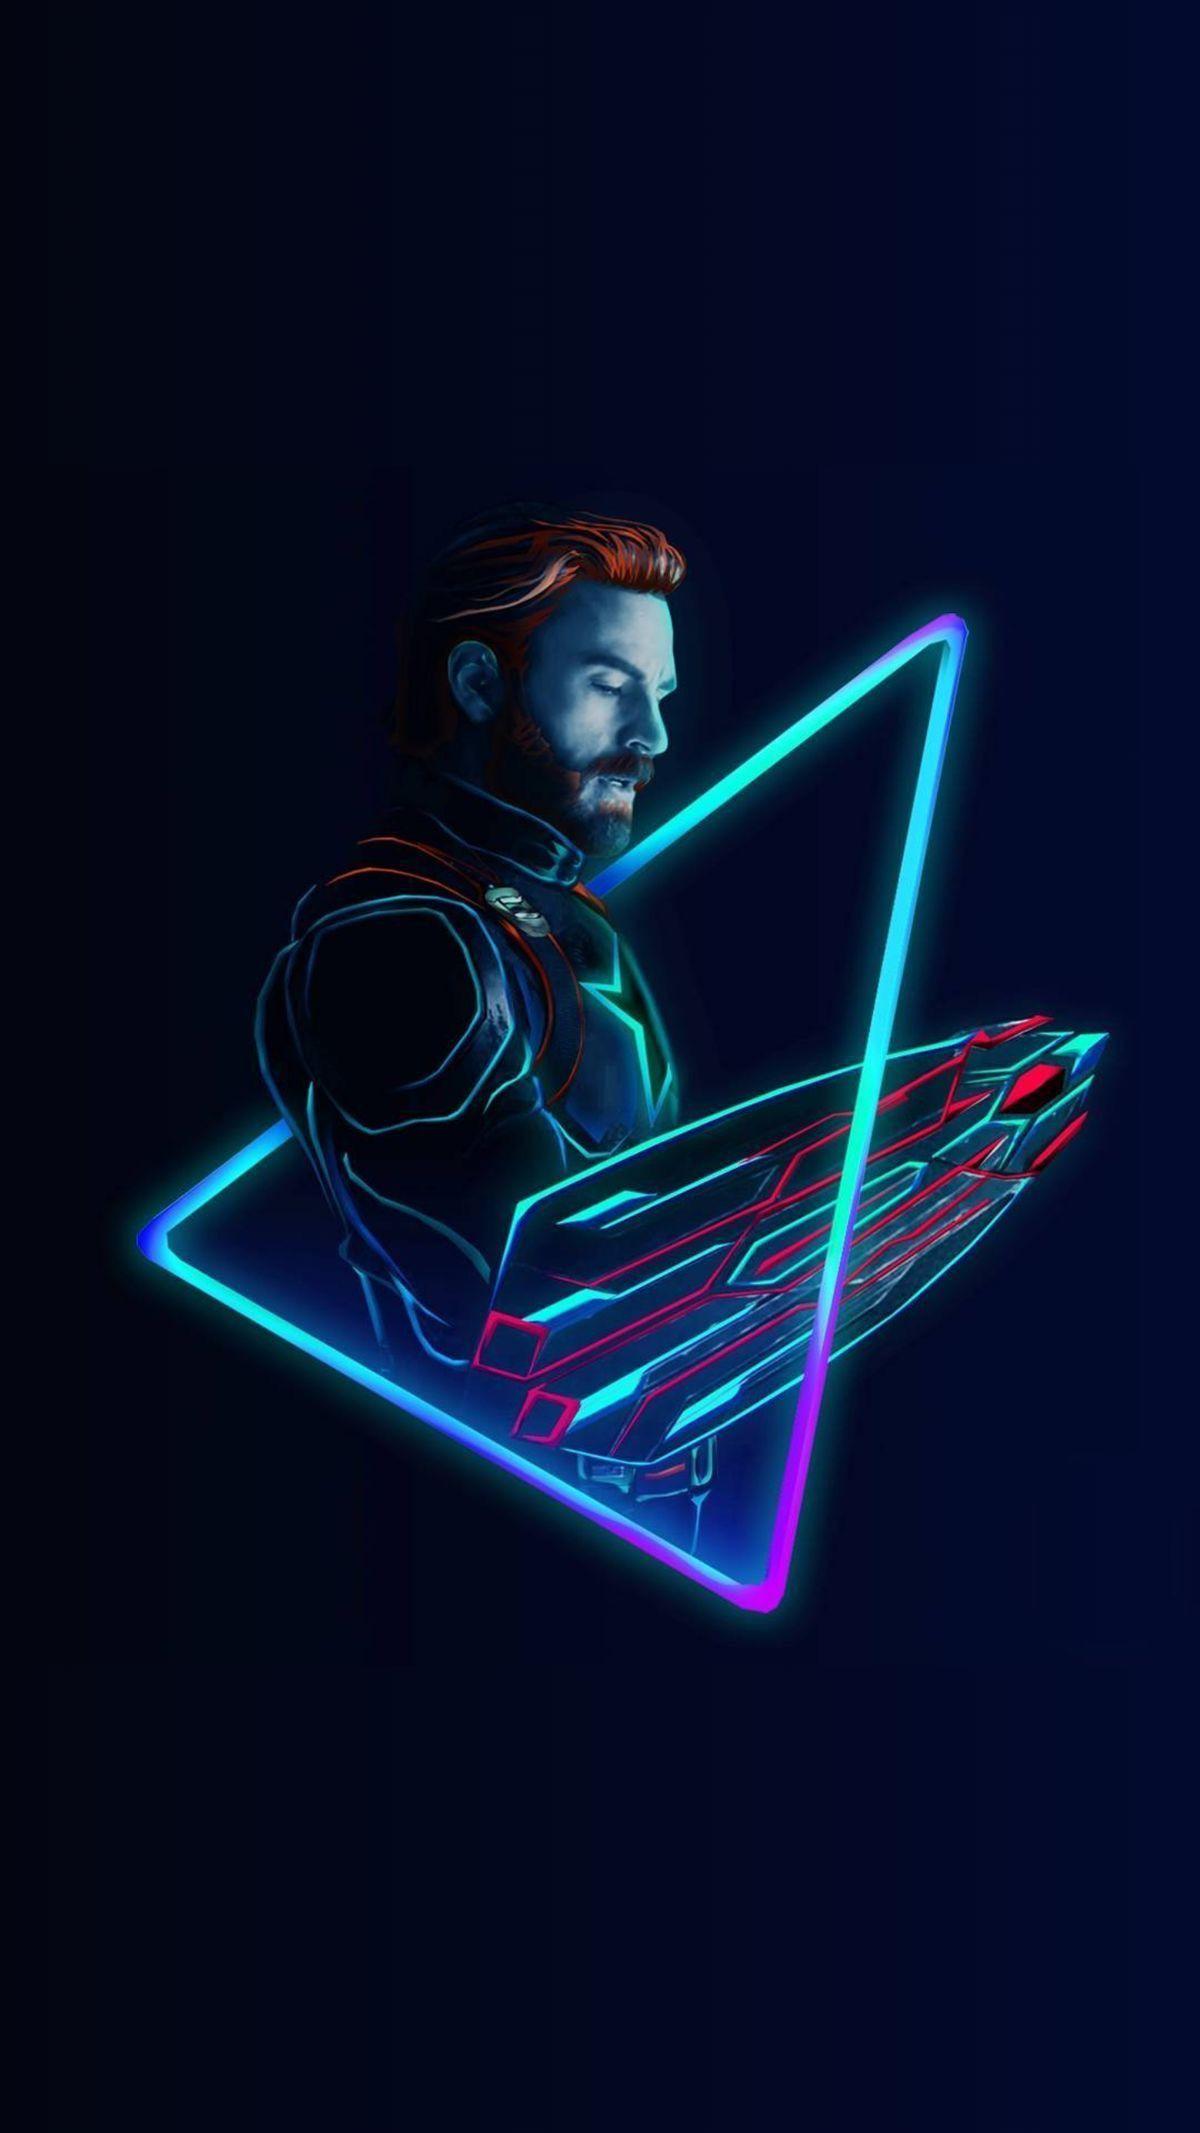 Neon art of captain America in avengers: infinity war. Captain